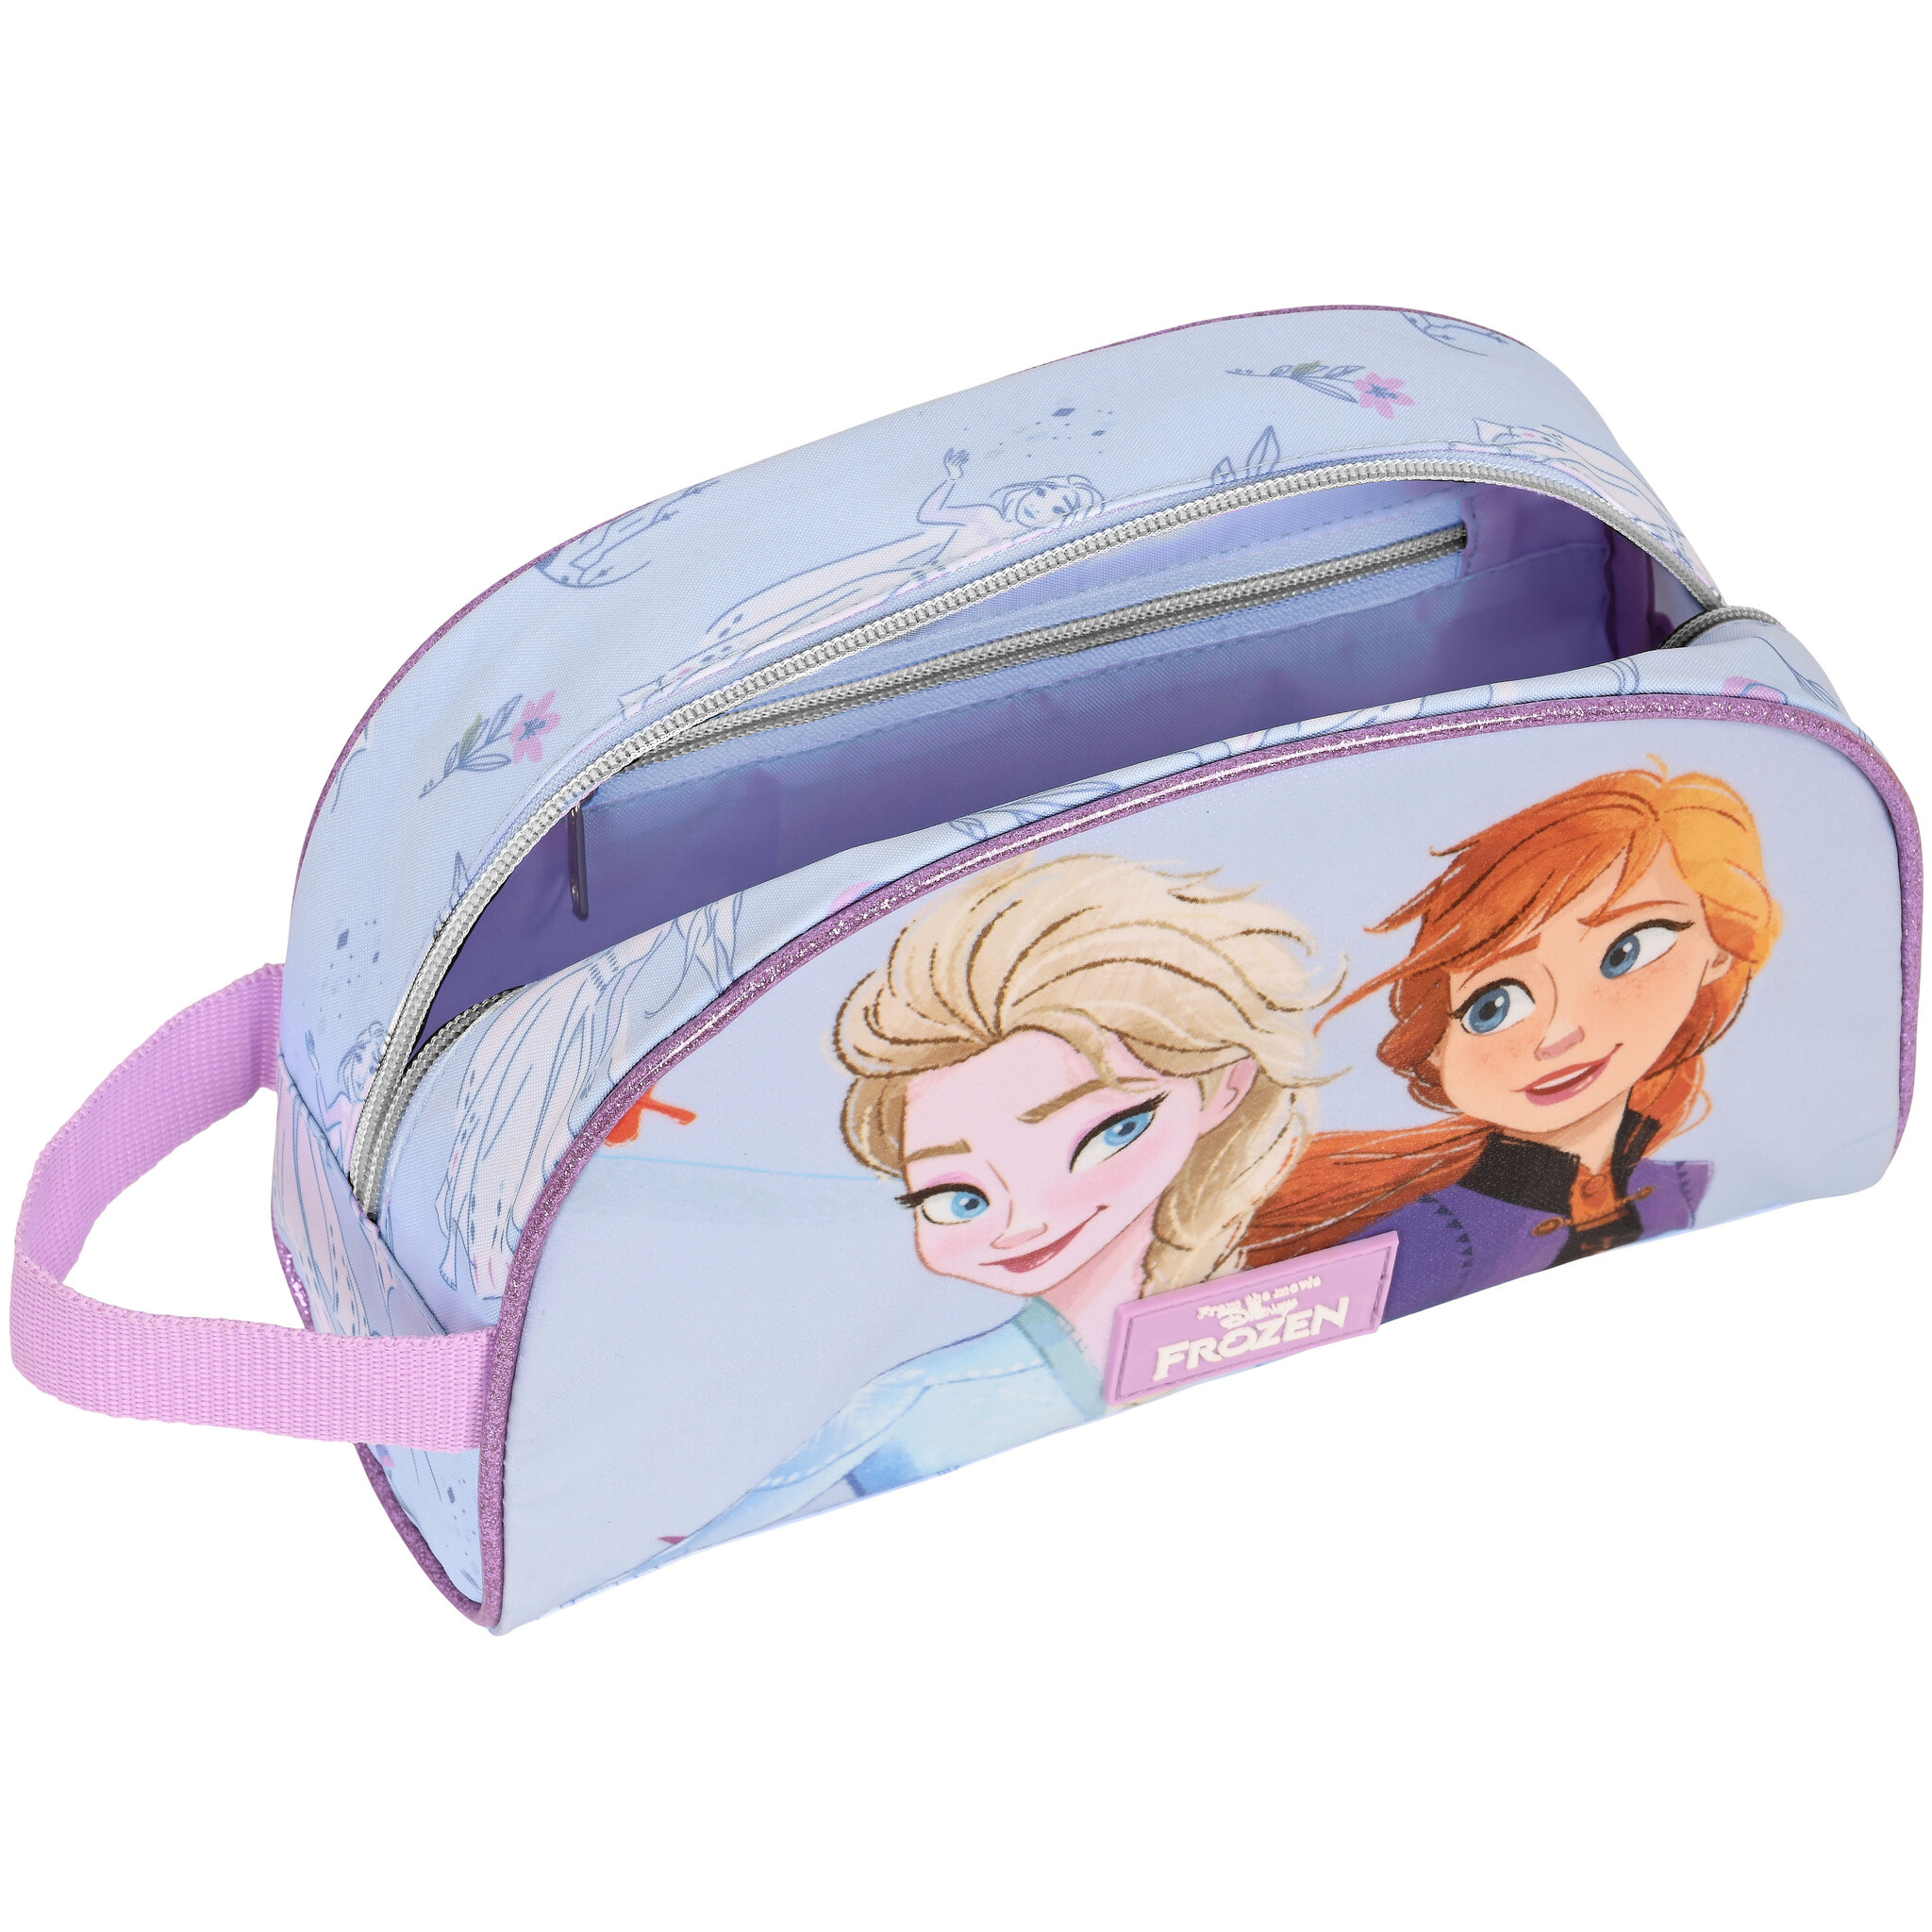 Disney Frozen Toiletry bag, Believe - 26 x 16 x 9 cm - Polyester